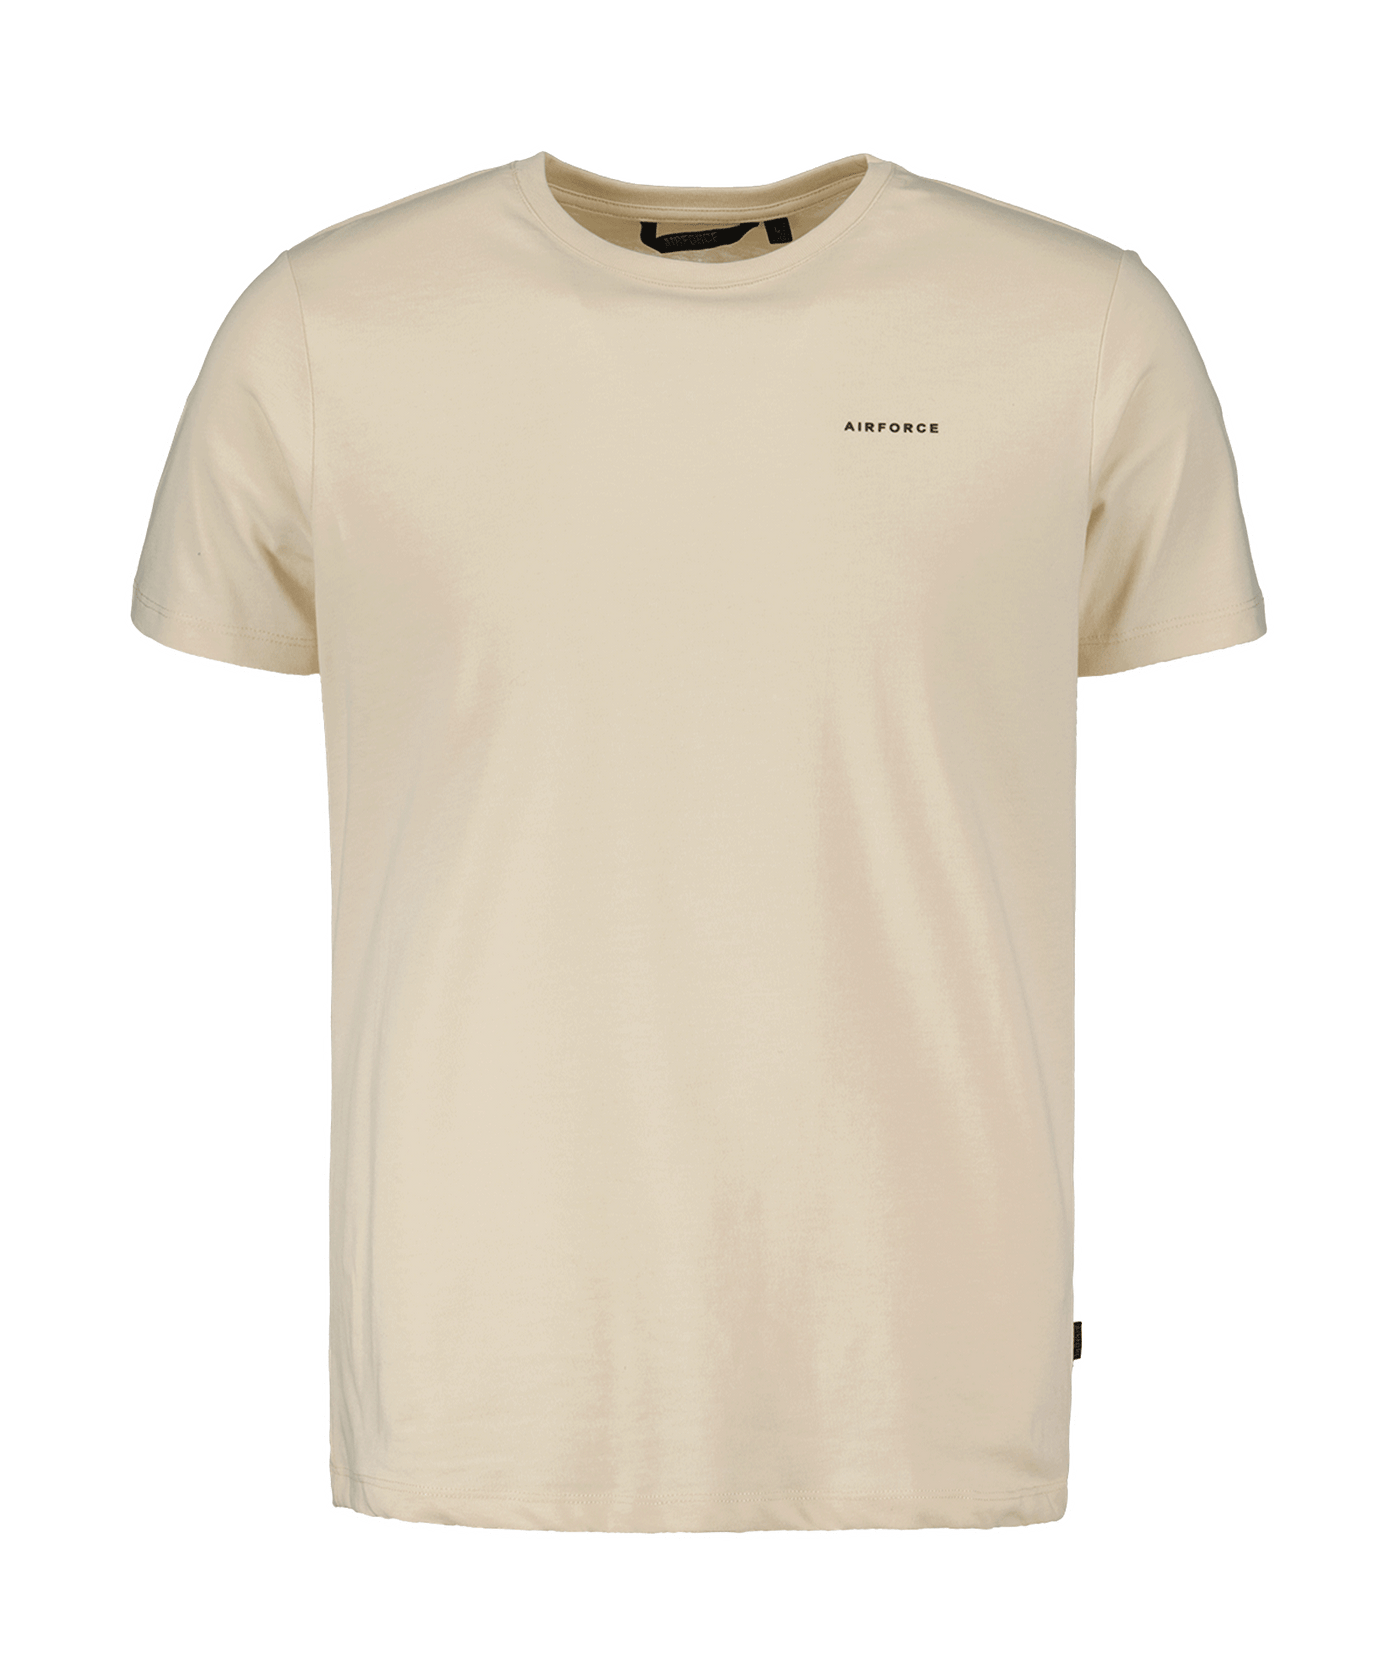 Airforce - Tbm0888 - Basic T-shirt - 855/901 Cement